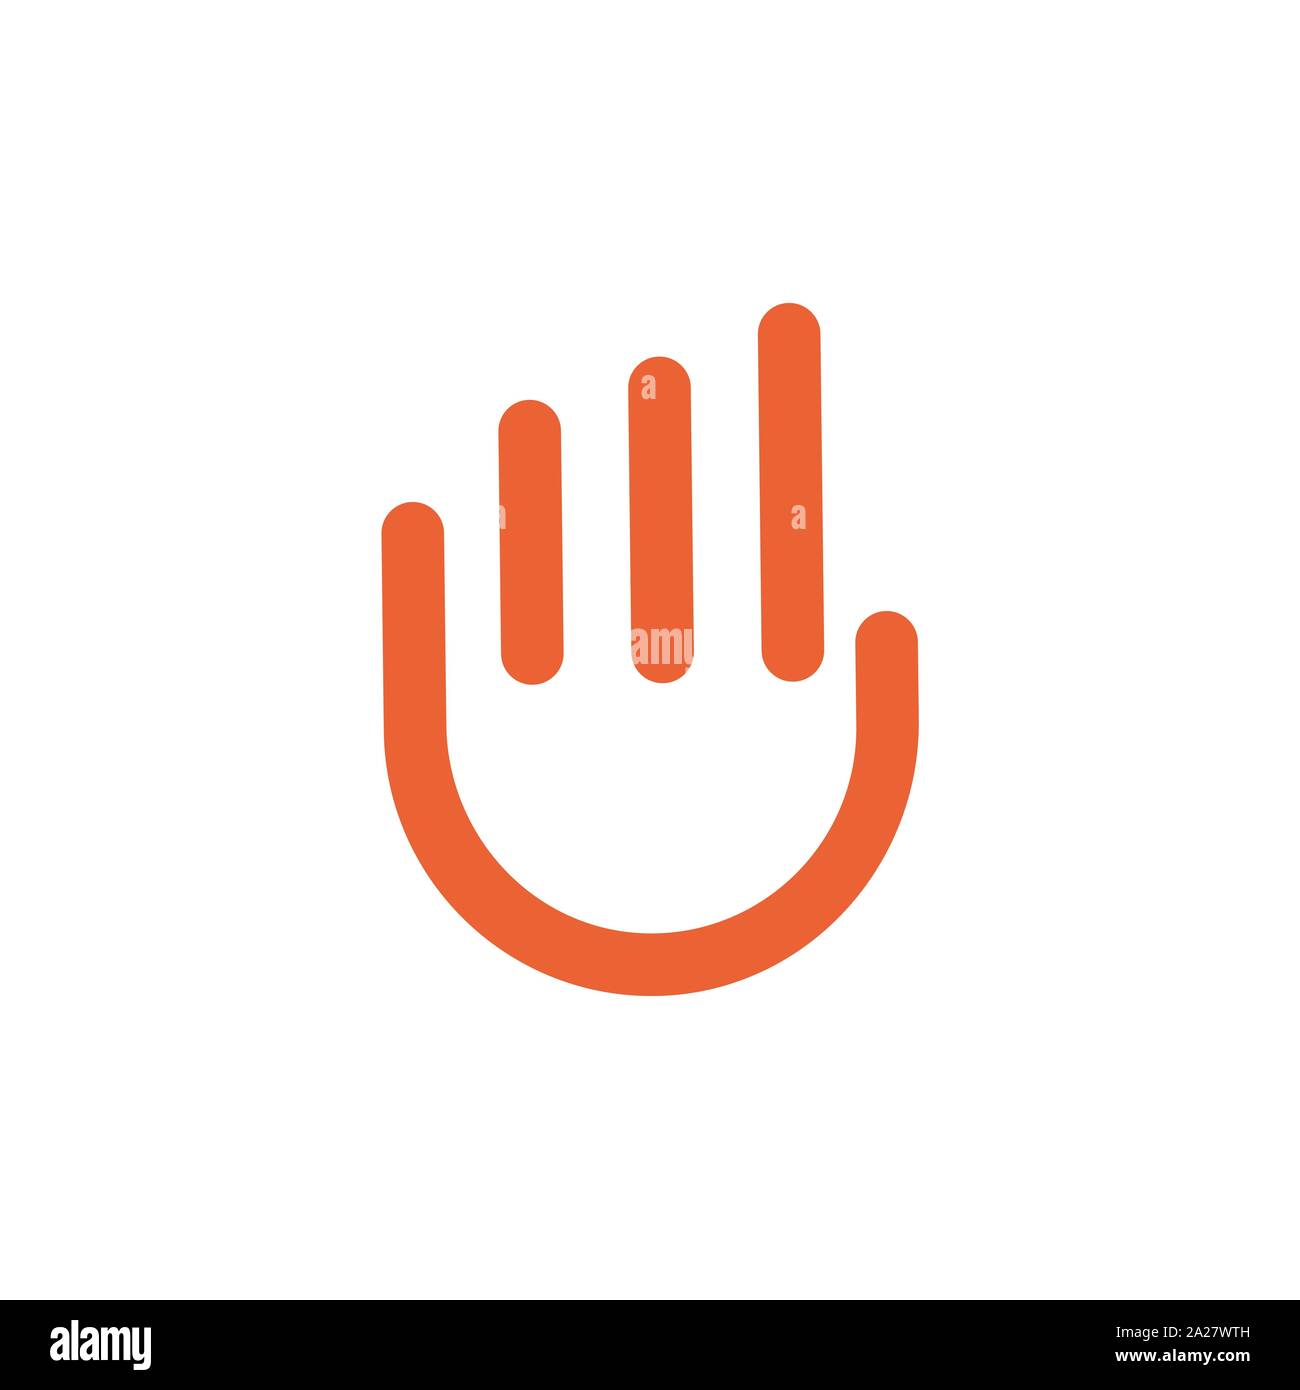 Abstract simple handshake icon. Modern stylized hand line logo stock illustration - Vector Stock Vector